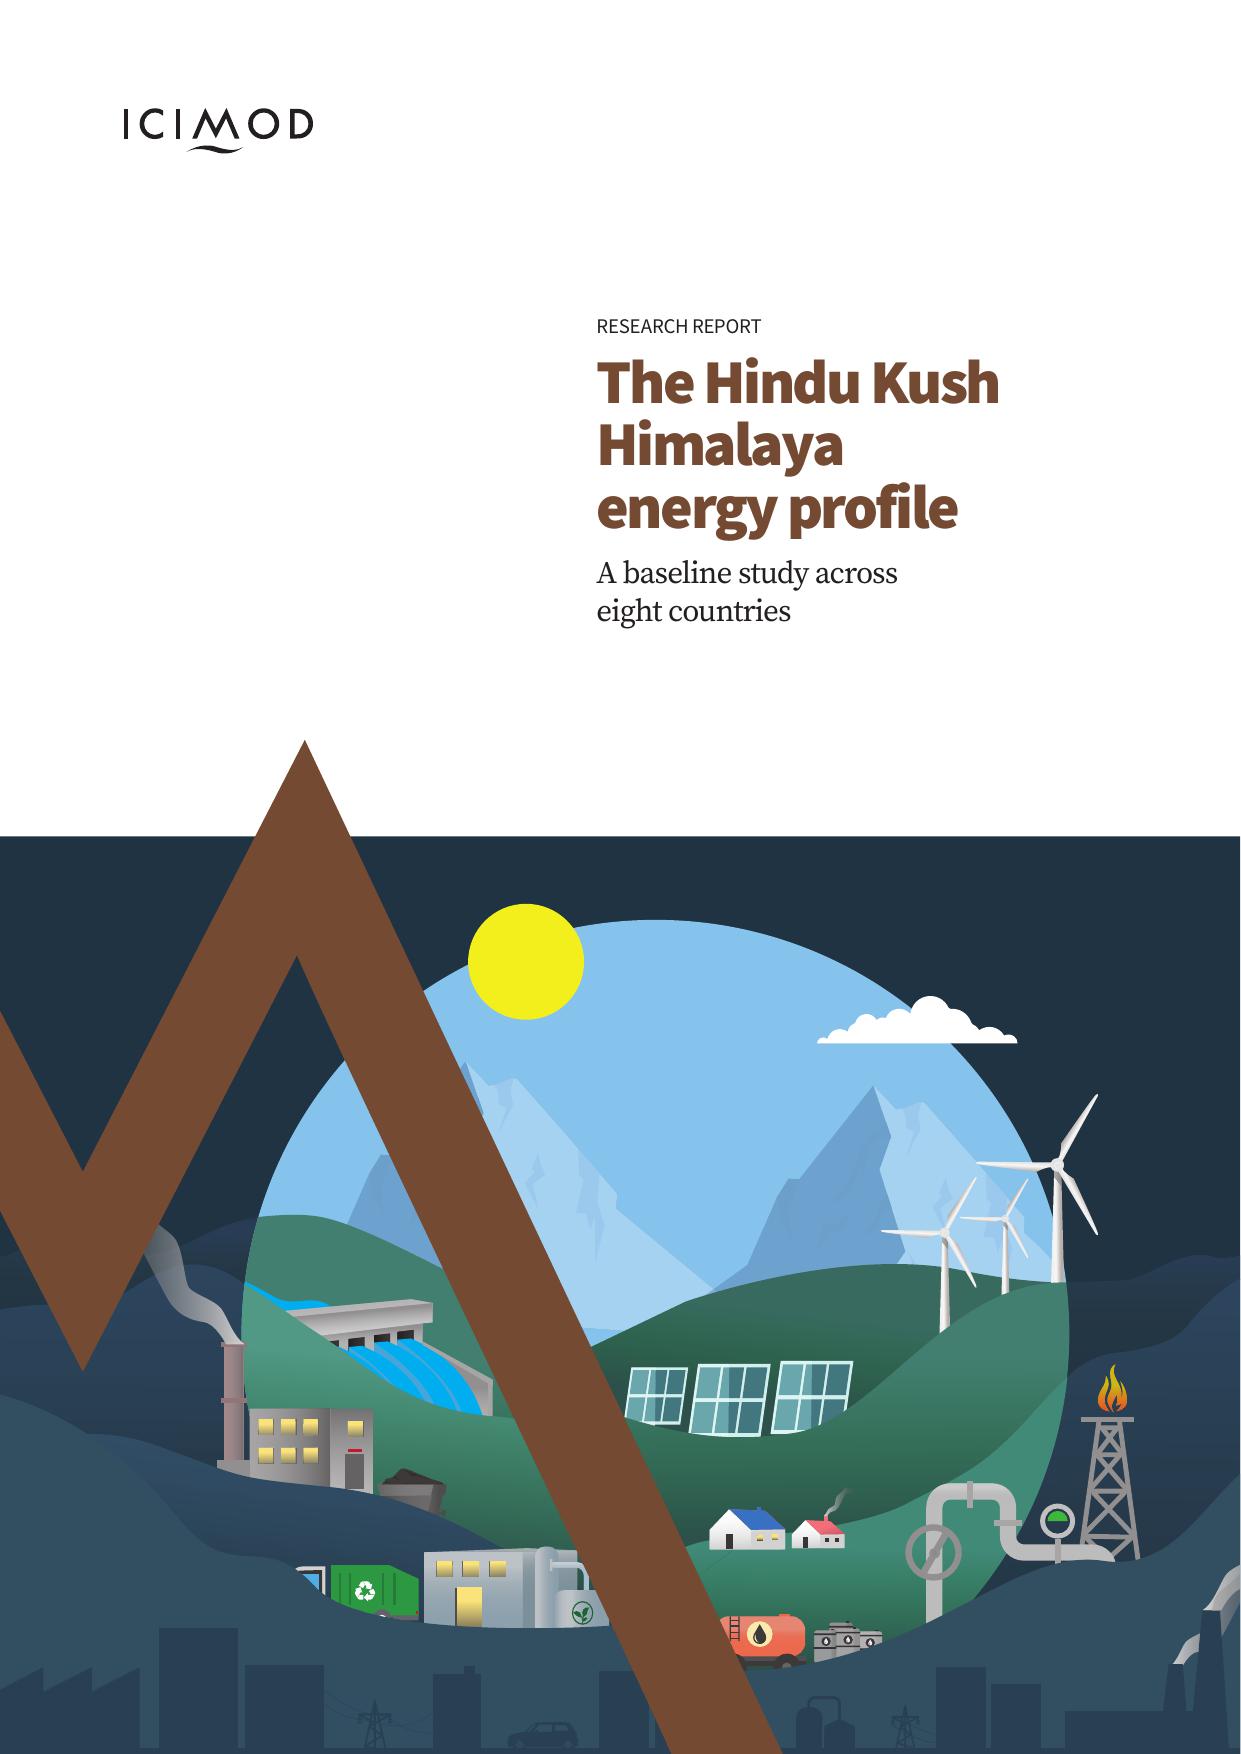 The Hindu Kush Himalaya energy profile: A baseline study across eight countries